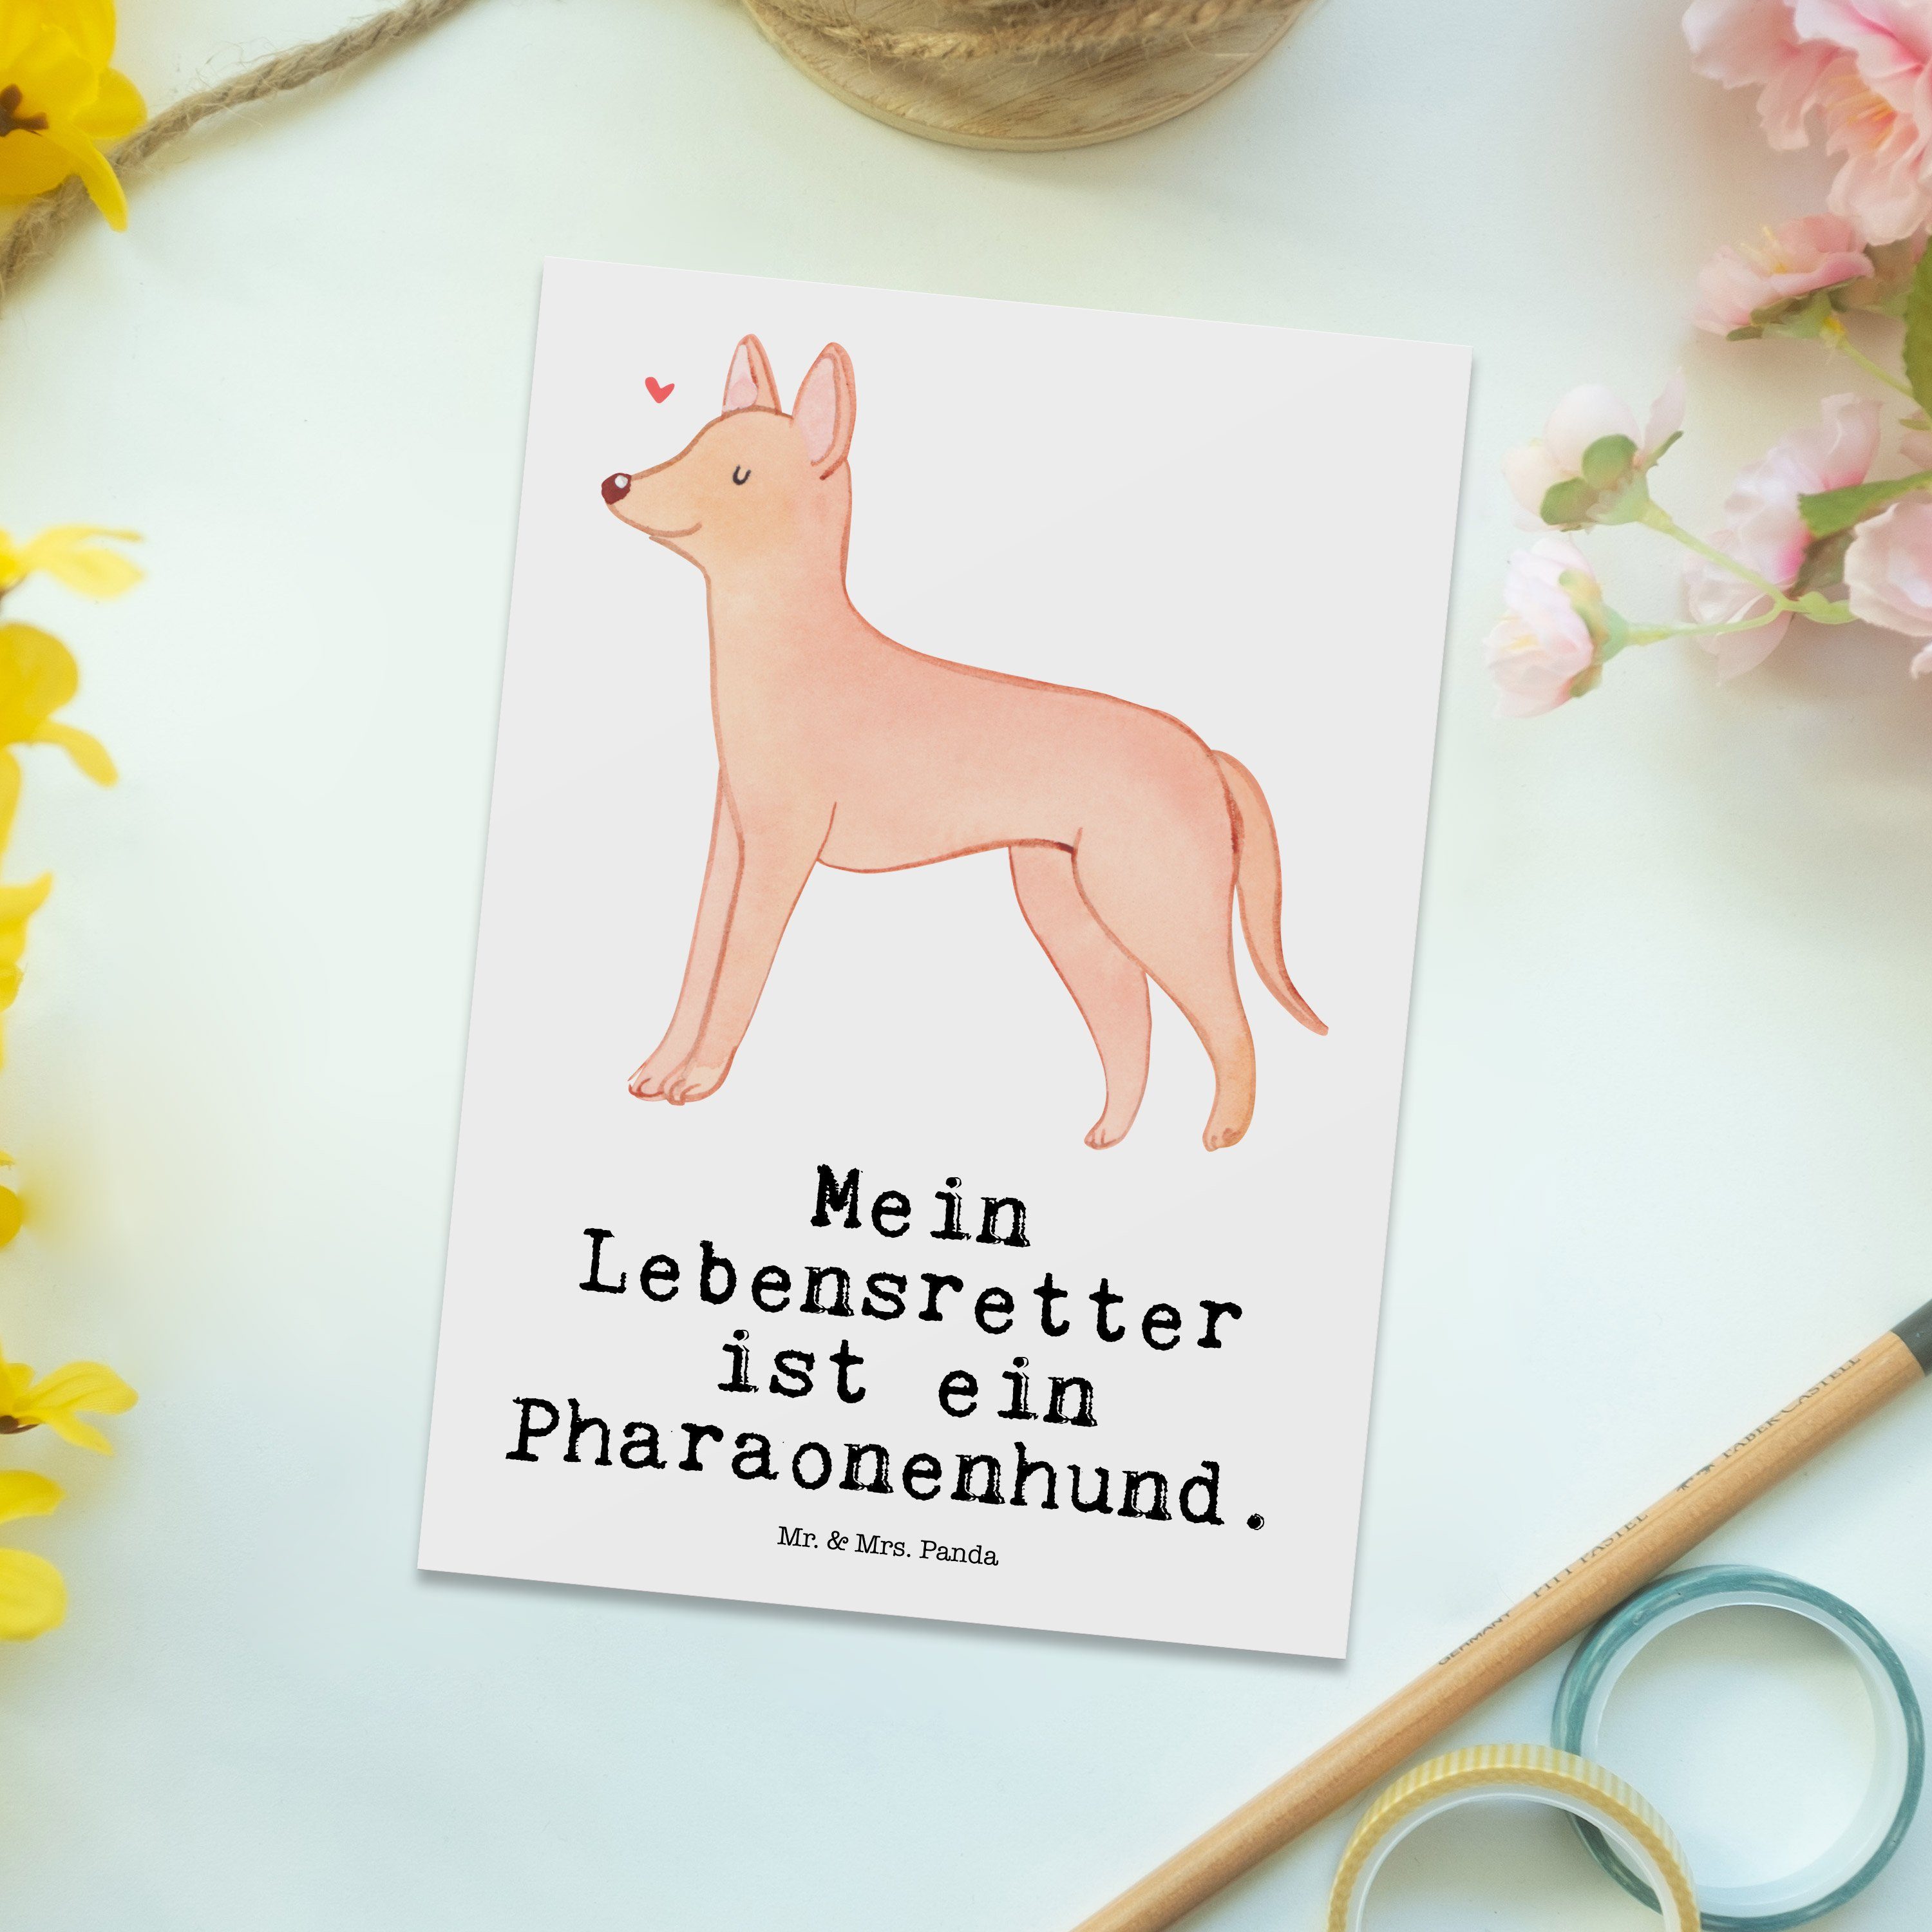 Mr. & - Pharaonenhund Geschenk, Weiß Panda Welpe, Lebensretter - Postkarte Geburtstagskarte Mrs.